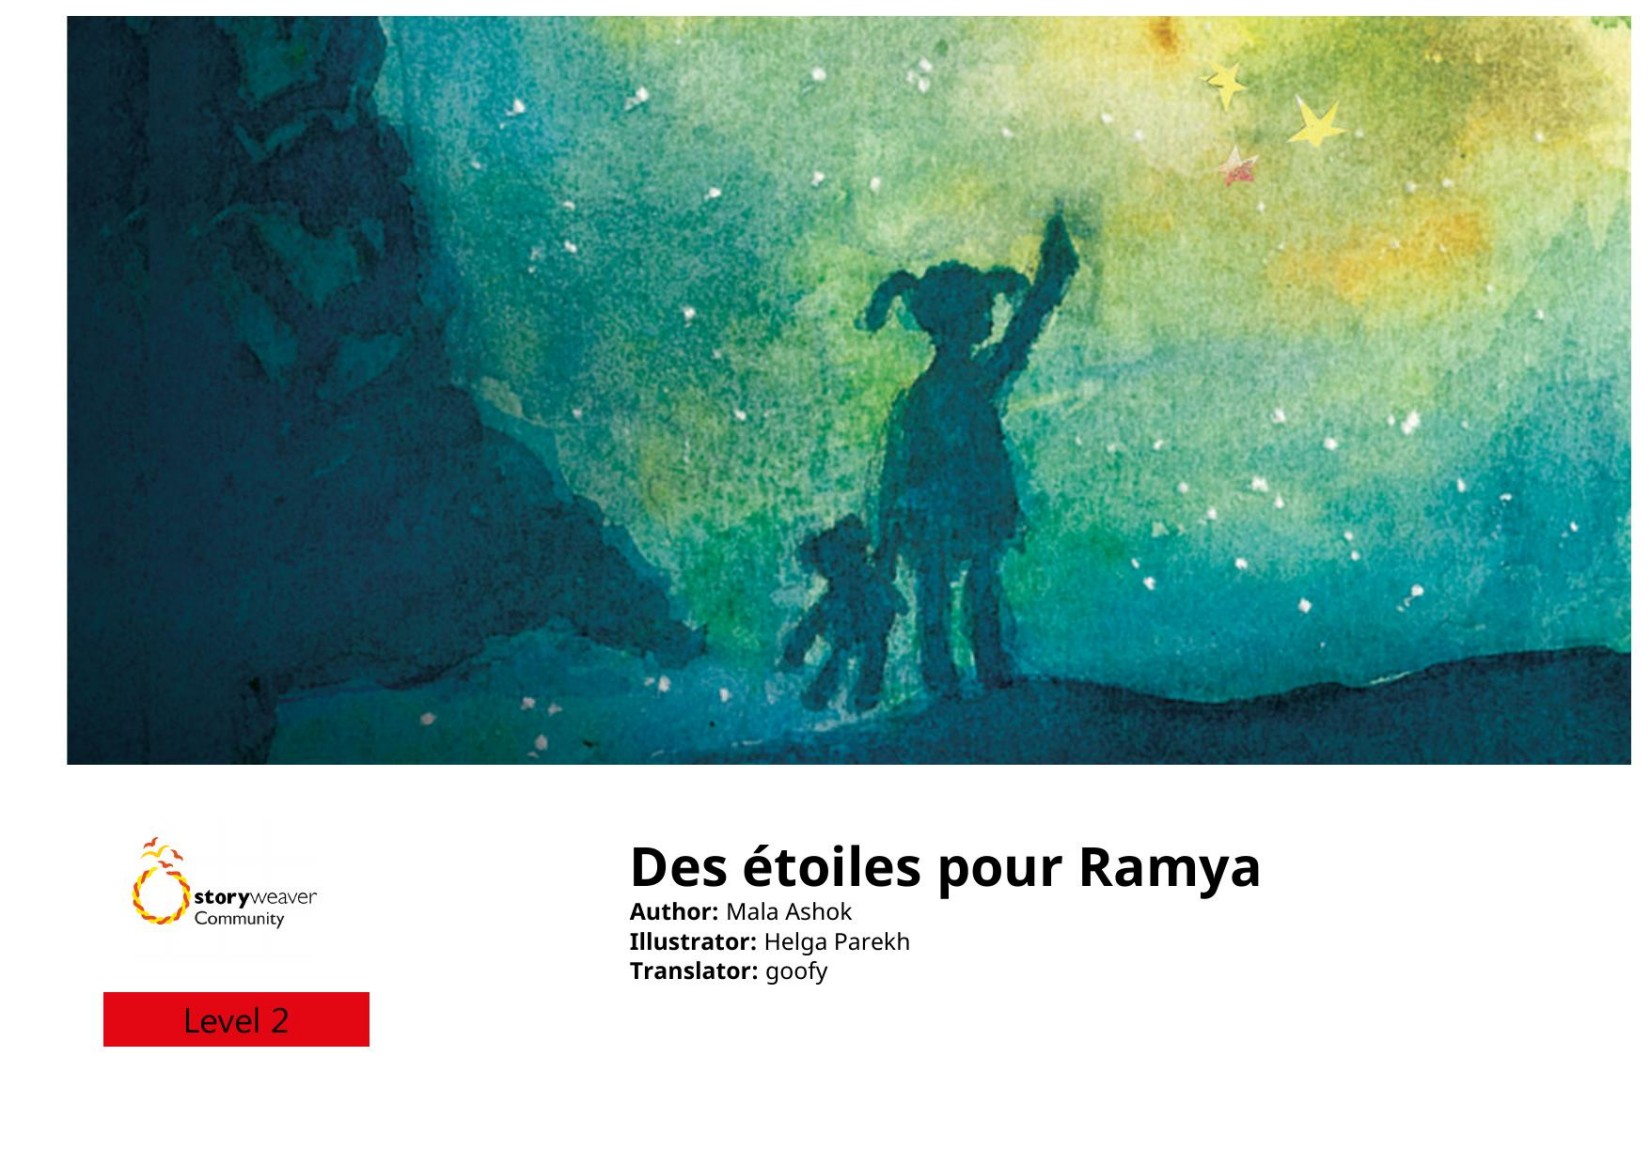 Des étoiles pour Ramya